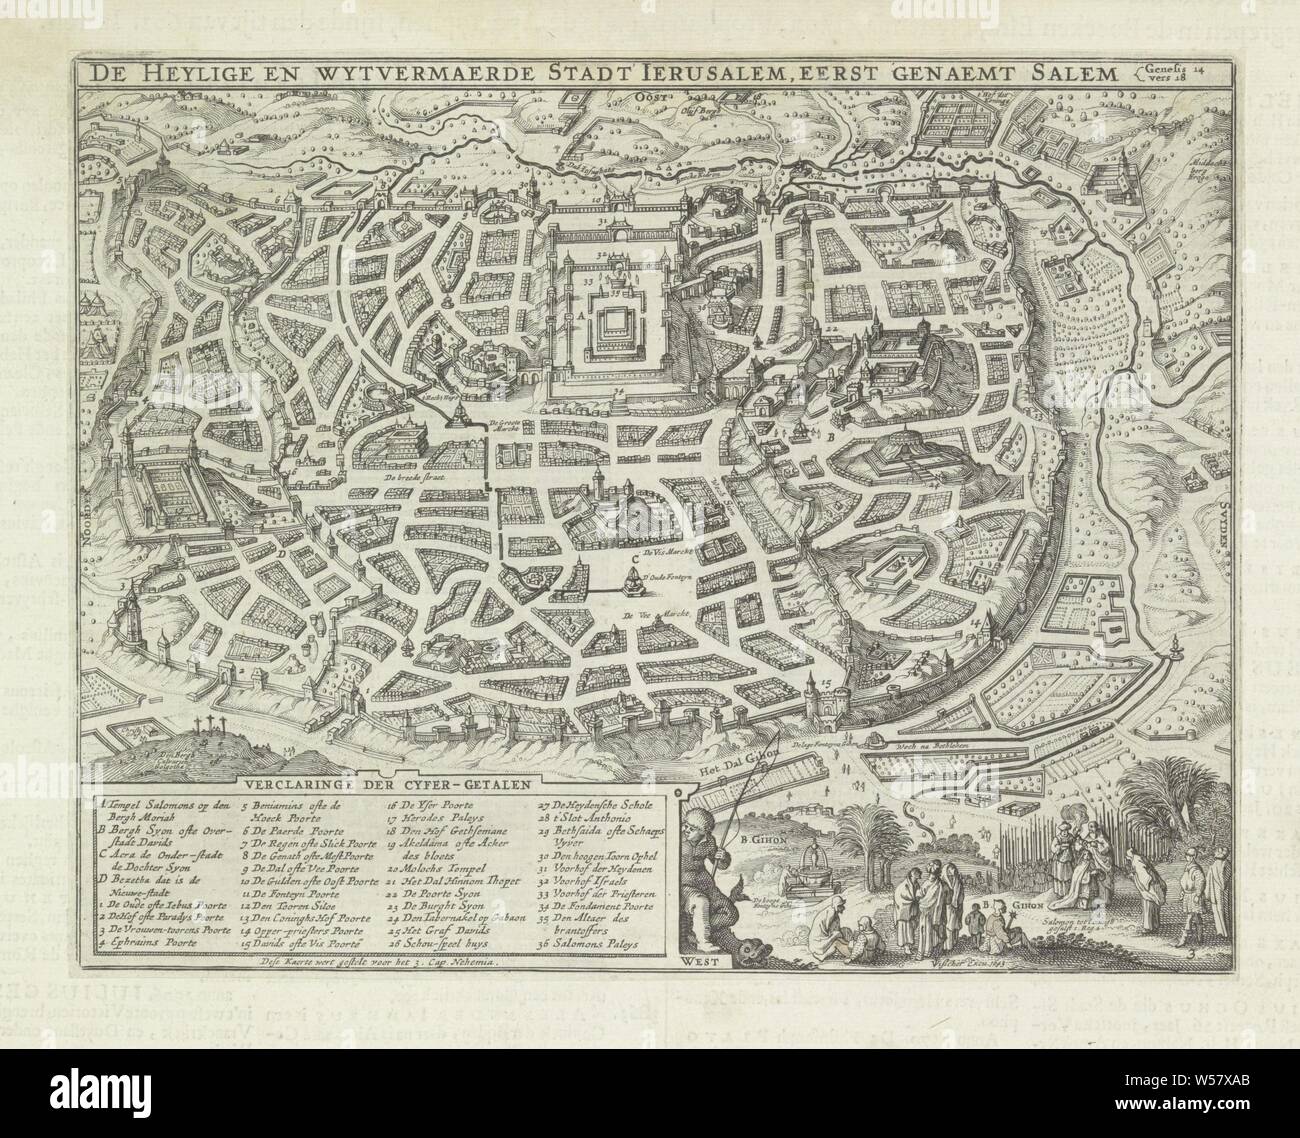 Map of Jerusalem, The Heylige and Wytvermaerde Stadt Ierusalem, First Name  Salem (title on object), Den